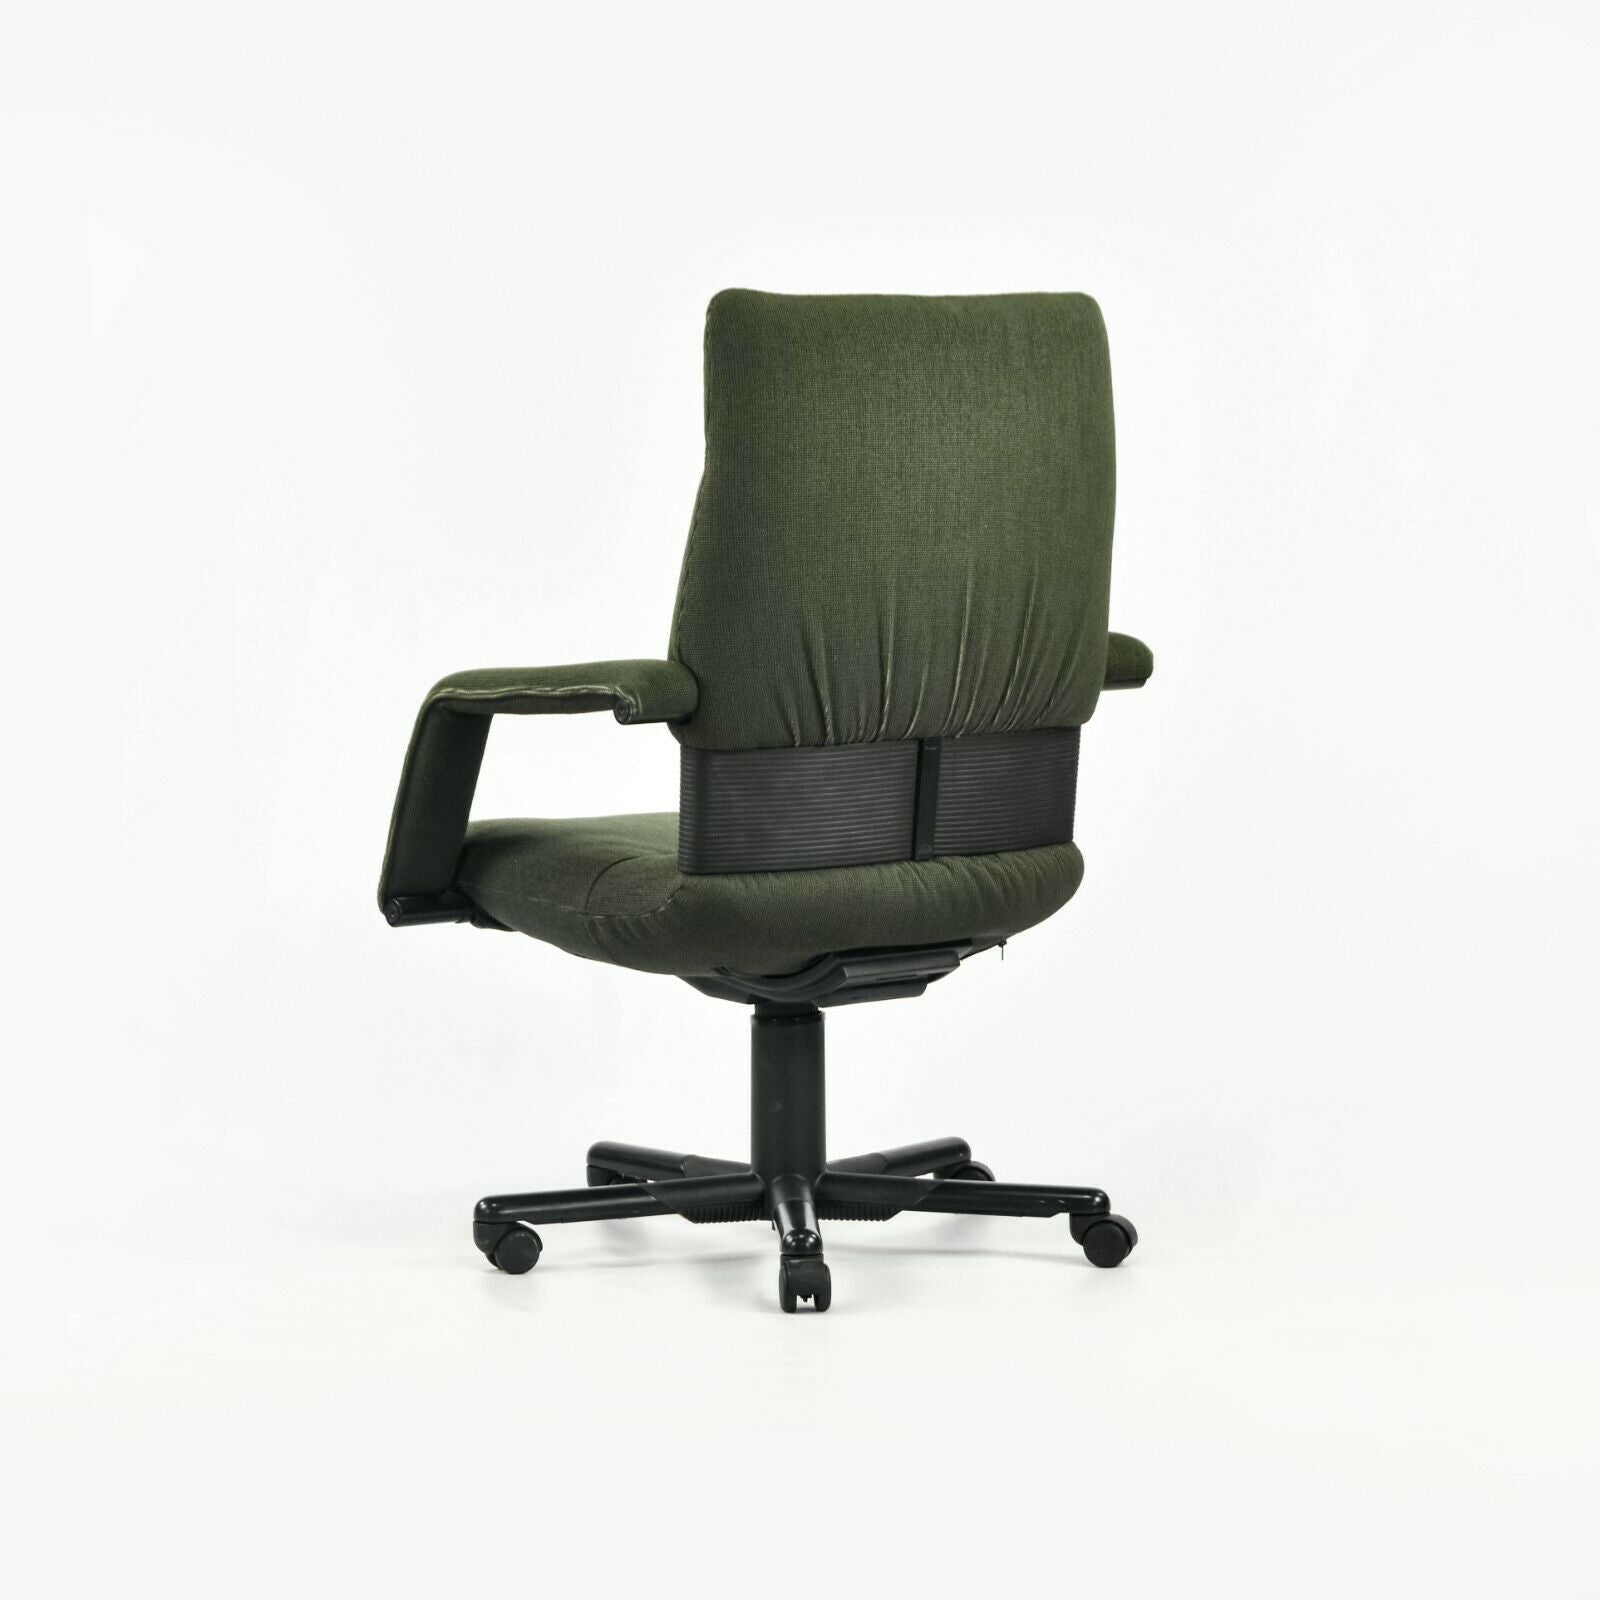 SOLD 1997 Mario Bellini Vitra Figura Post Modern High Back Desk Chair in Green Fabric